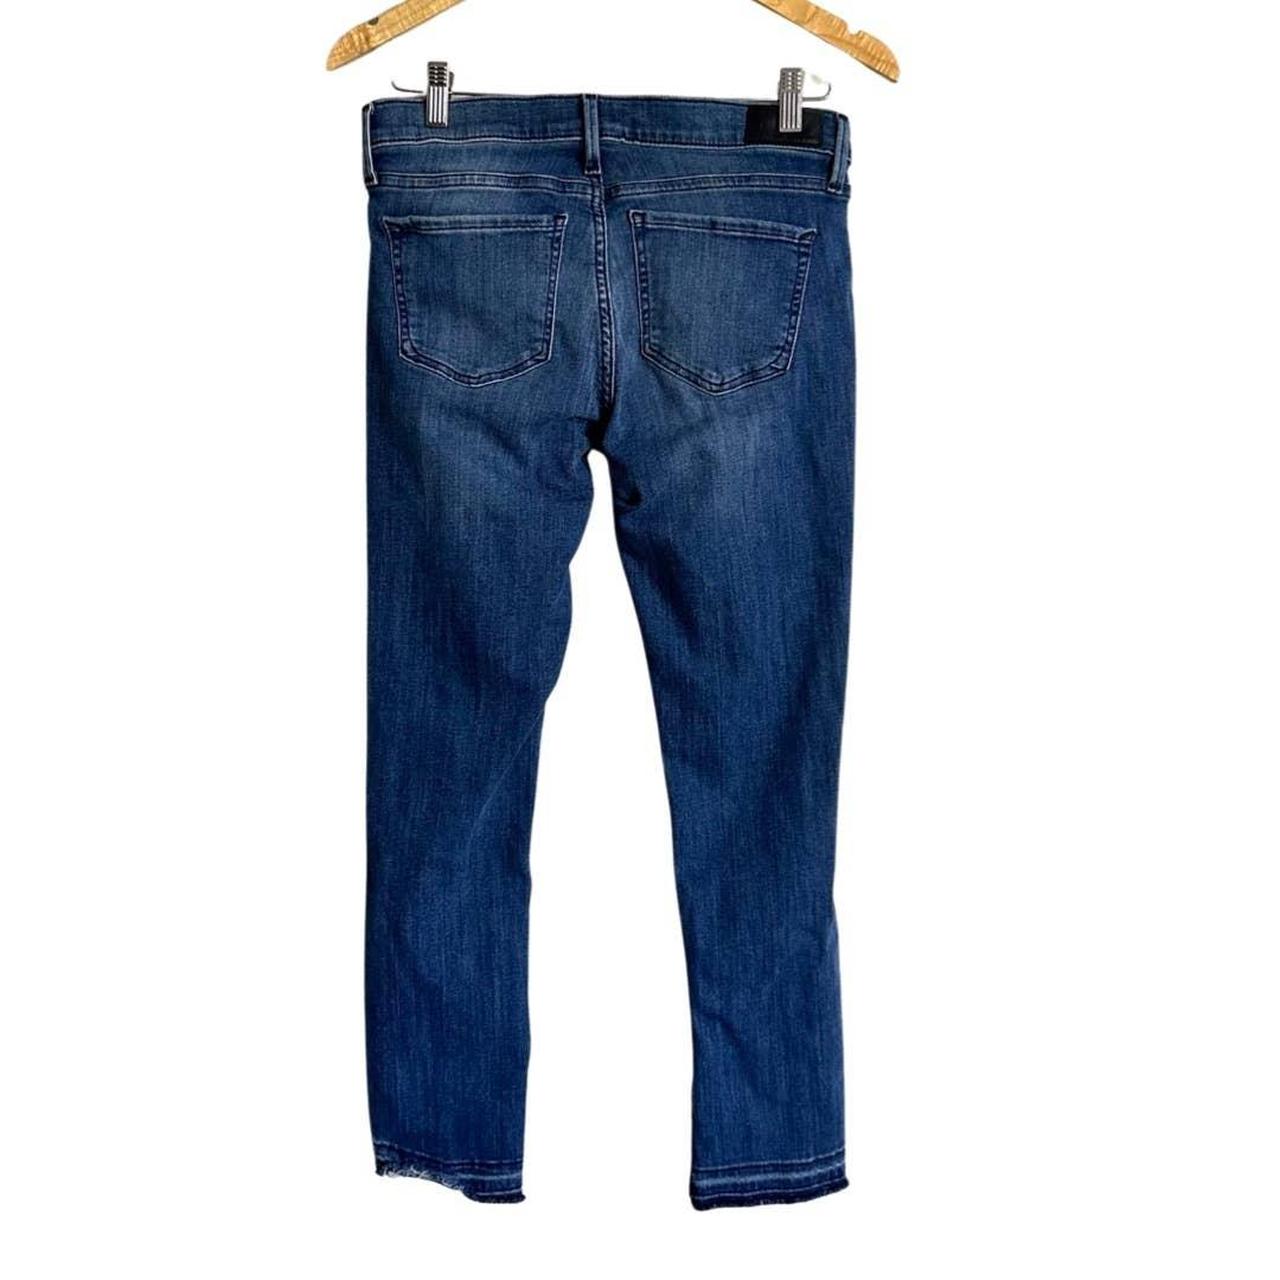 Distressed Express Jeans Denim Size: Women's 16 - Depop